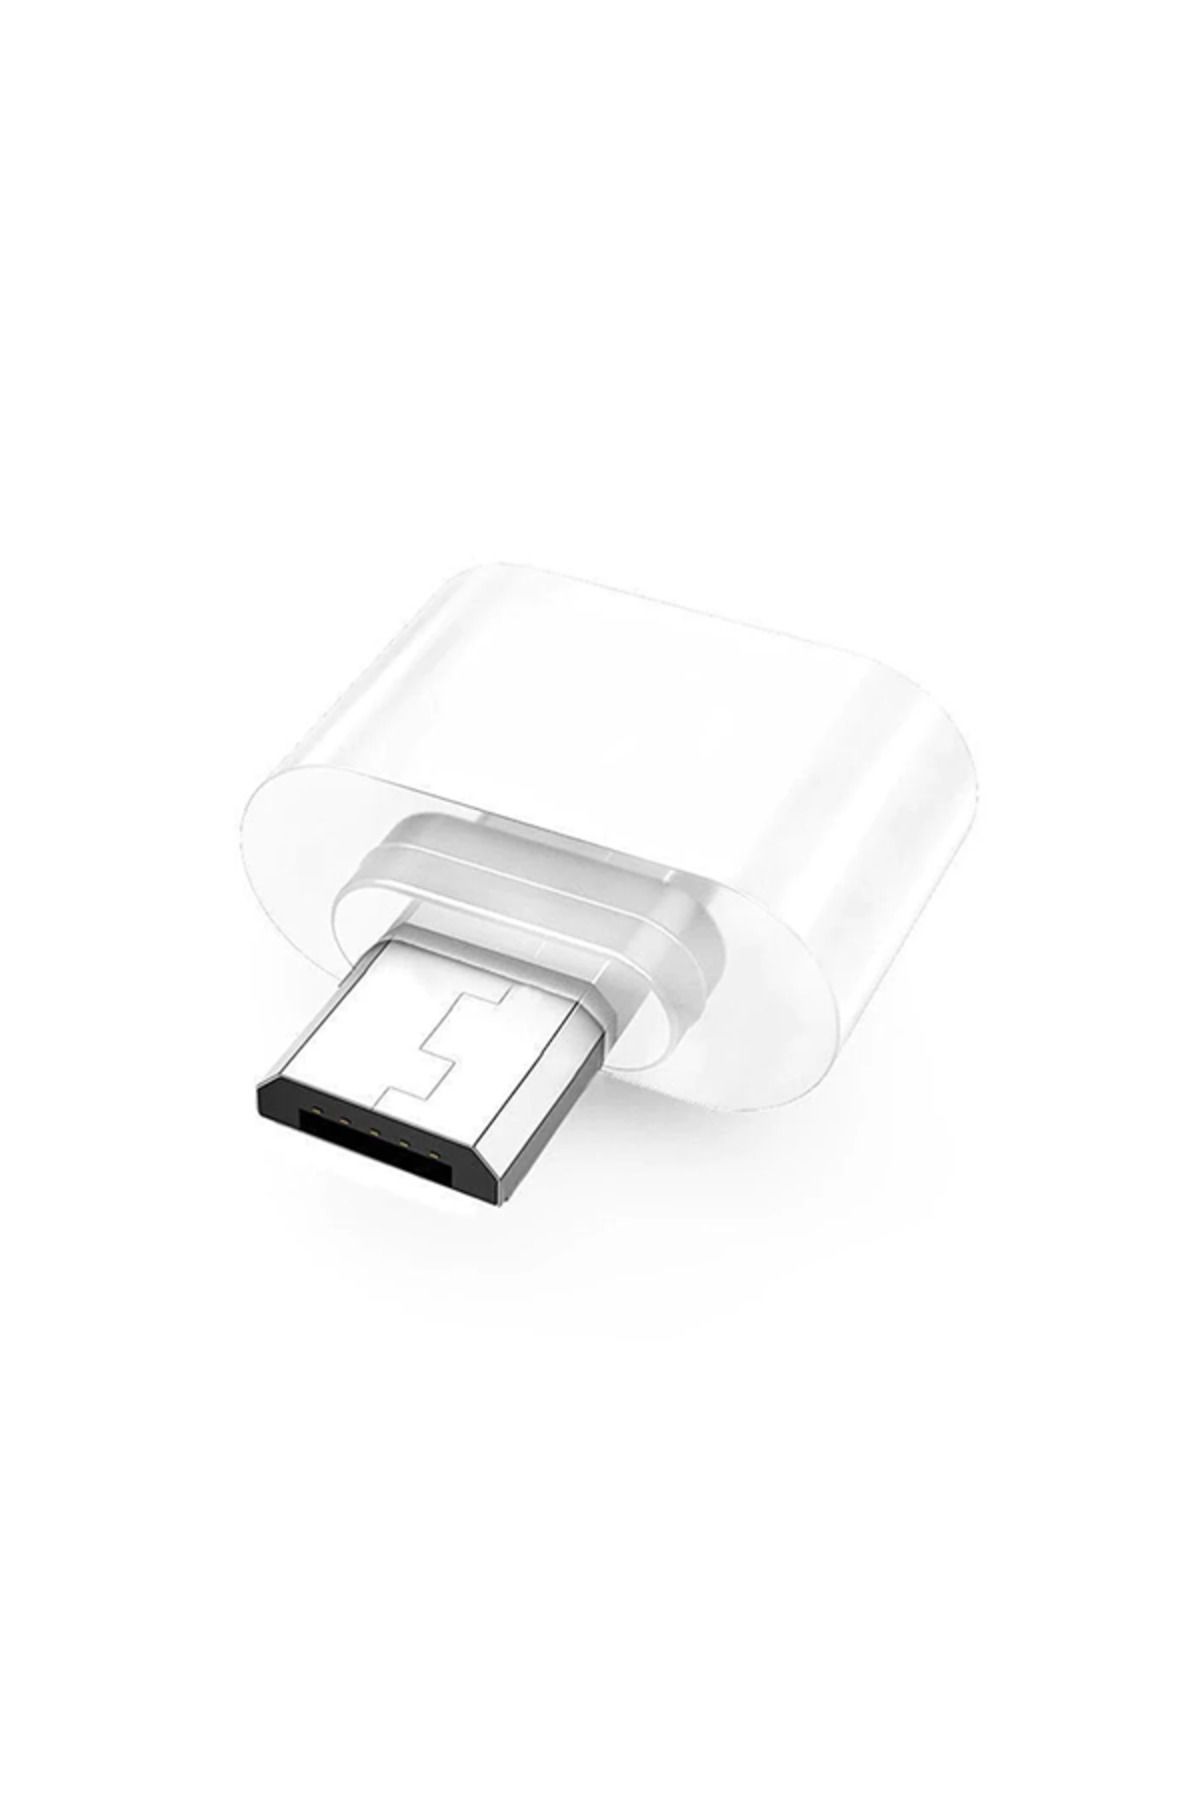 Platoon Micro USB OTG Adaptör 2.0 Dönüştürücü Android Tablet Telefon Dizüstü Klavyesi Fare USB Kart Okuyucu